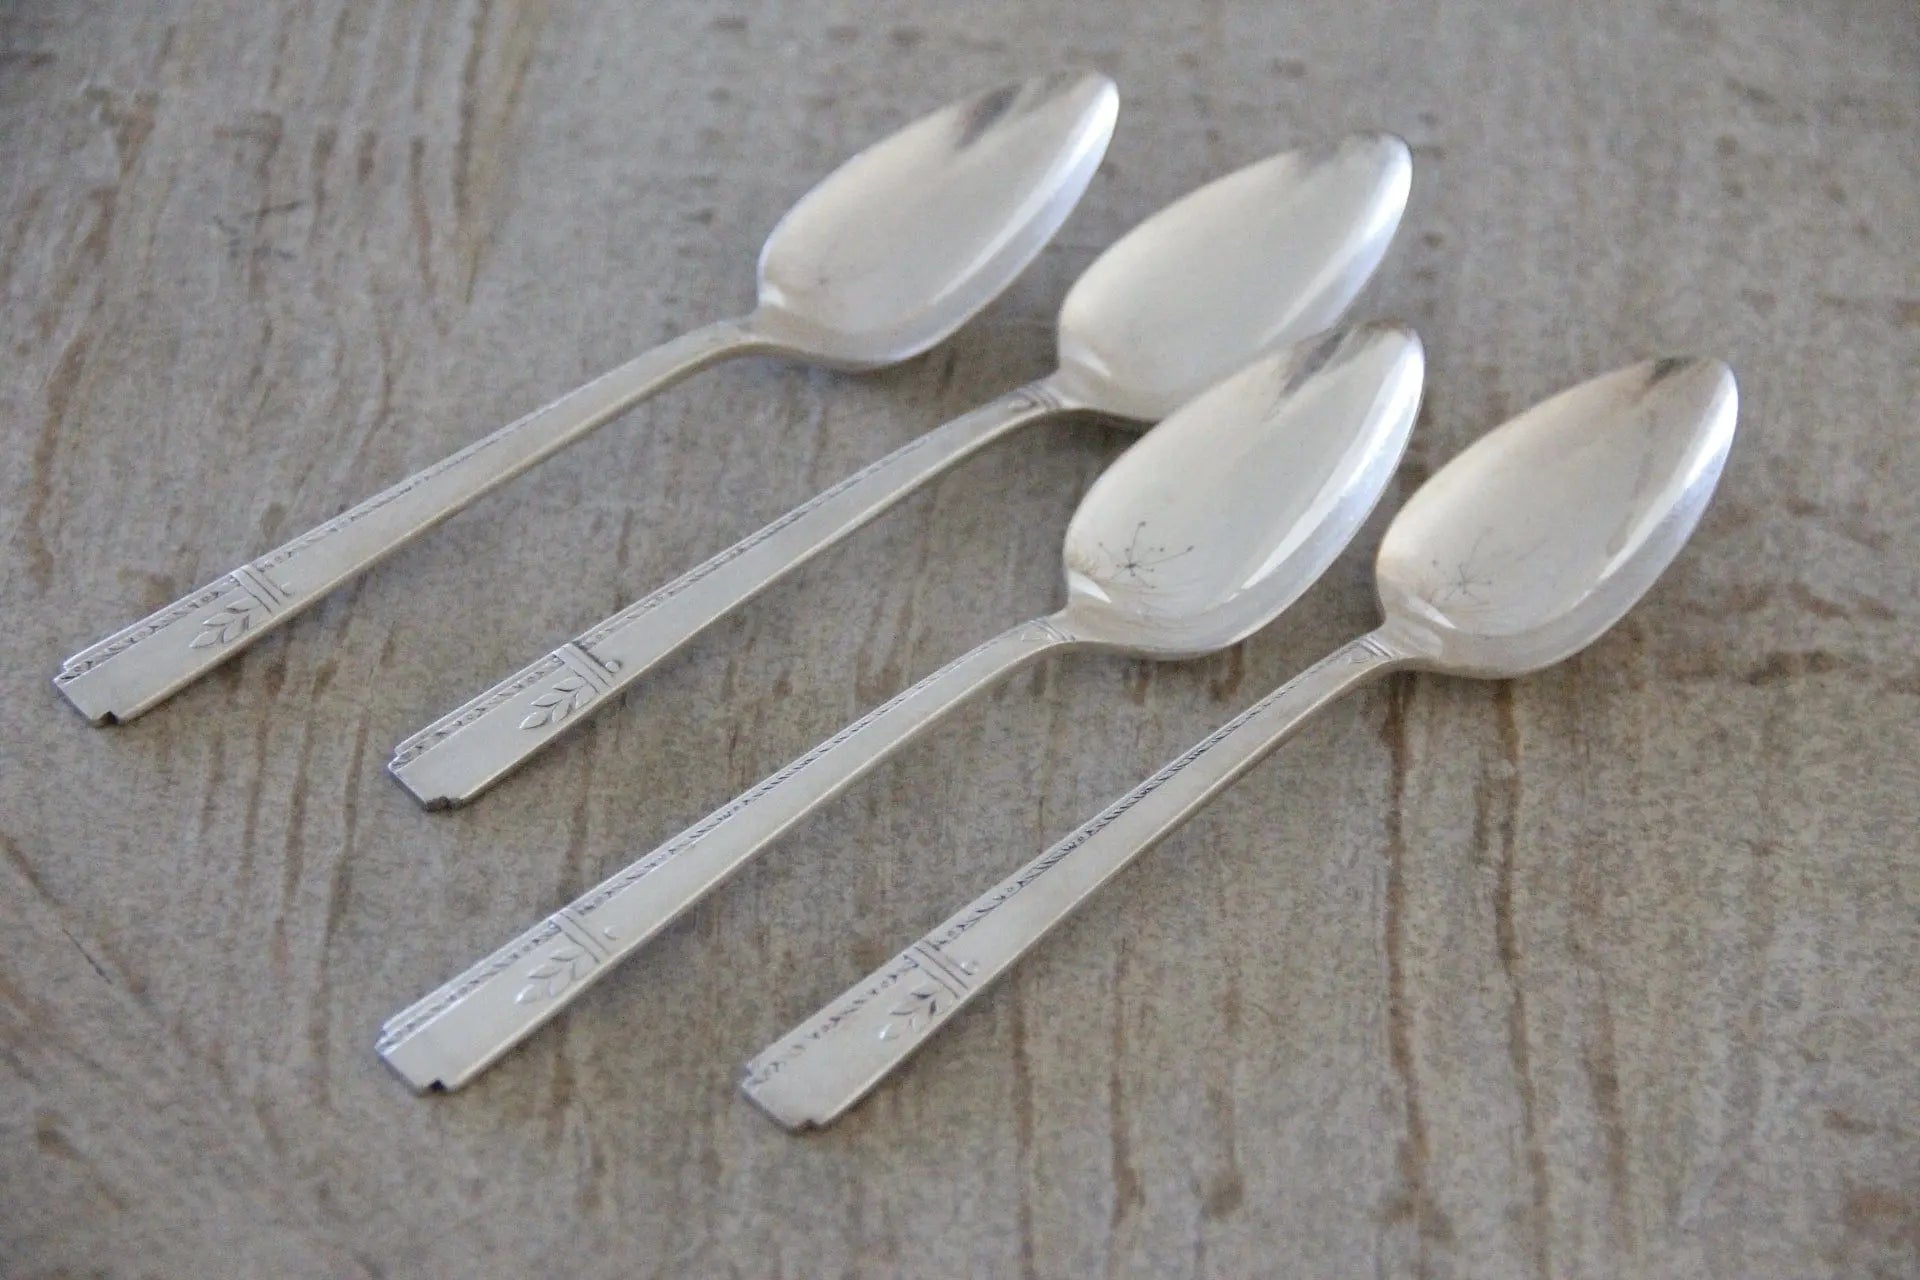 Antique Heirloom Silver Teaspoons Set | Flatware 4 Pcs.  Debra Hall Lifestyle